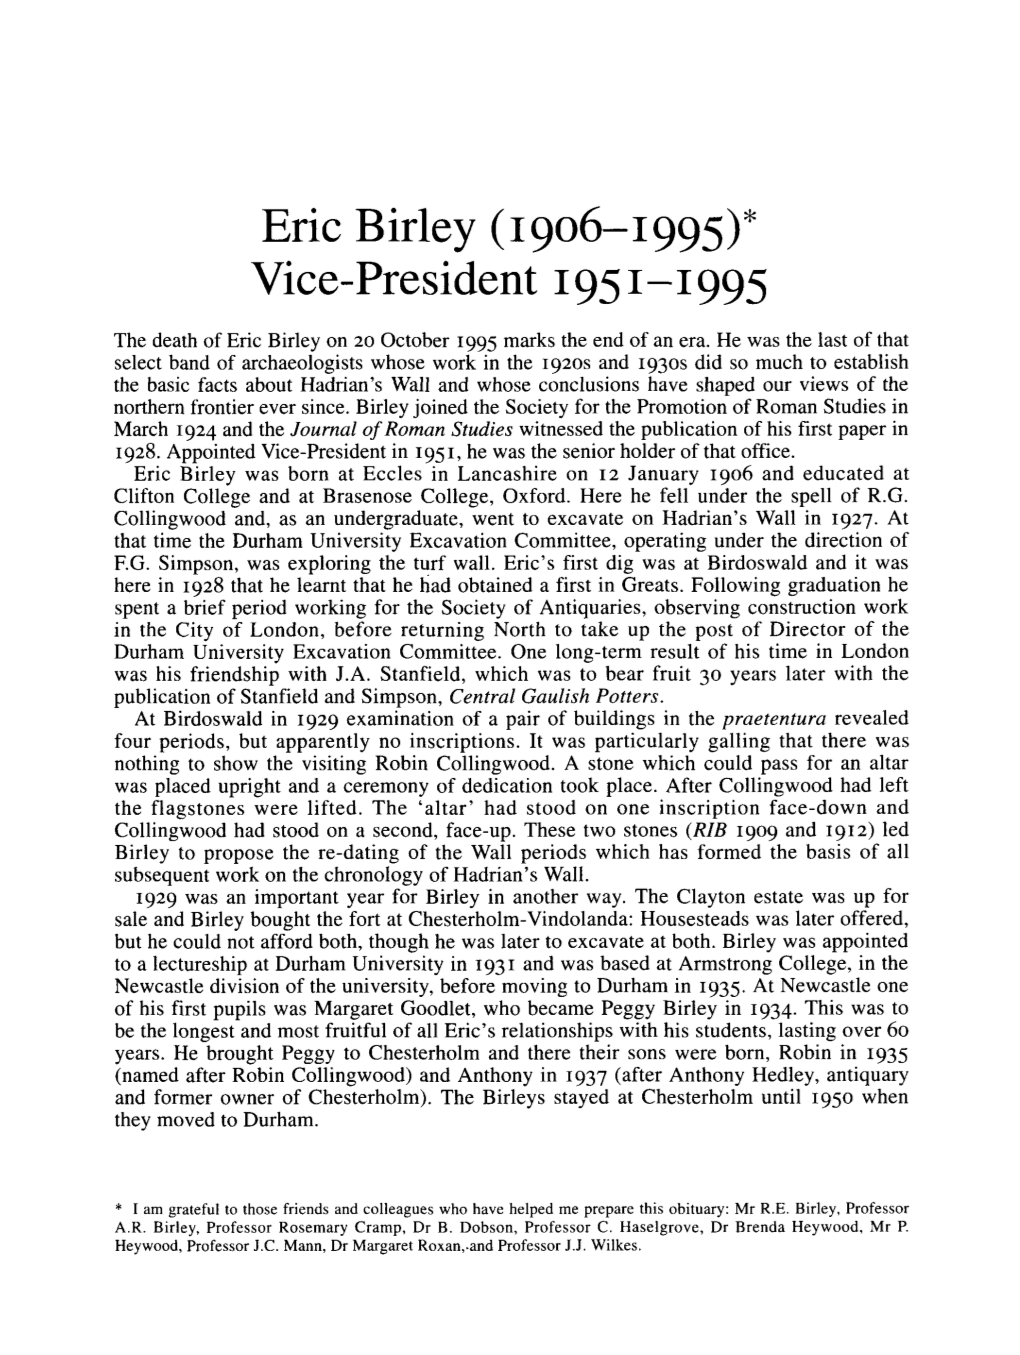 Eric Birley (I 906-1995)* Vice-President 1951-1995